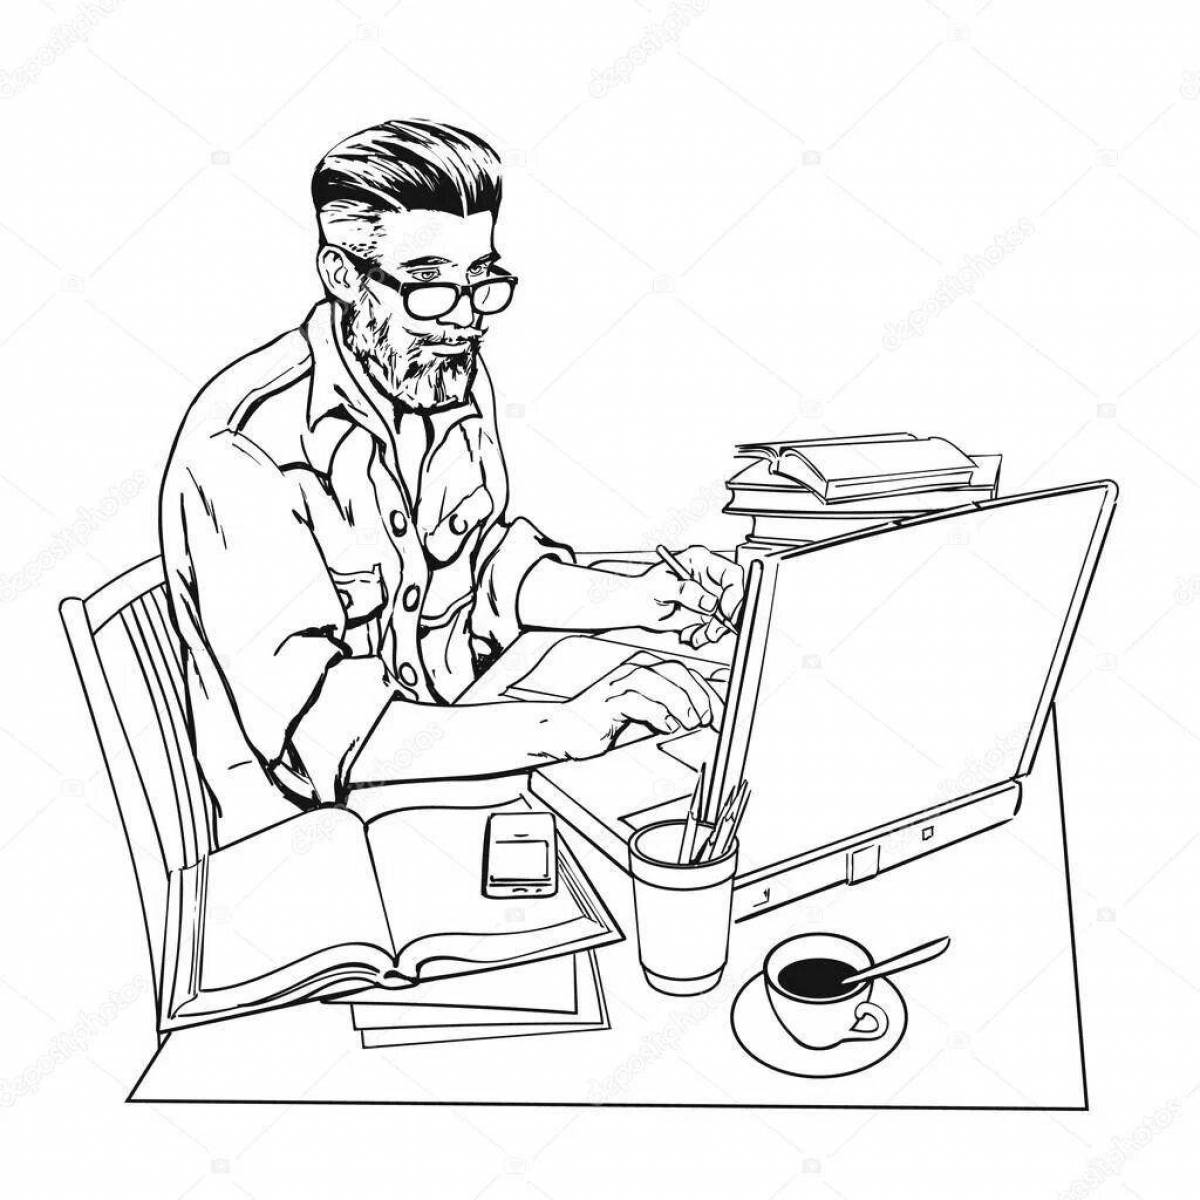 Мужчина за компьютером нарисованный